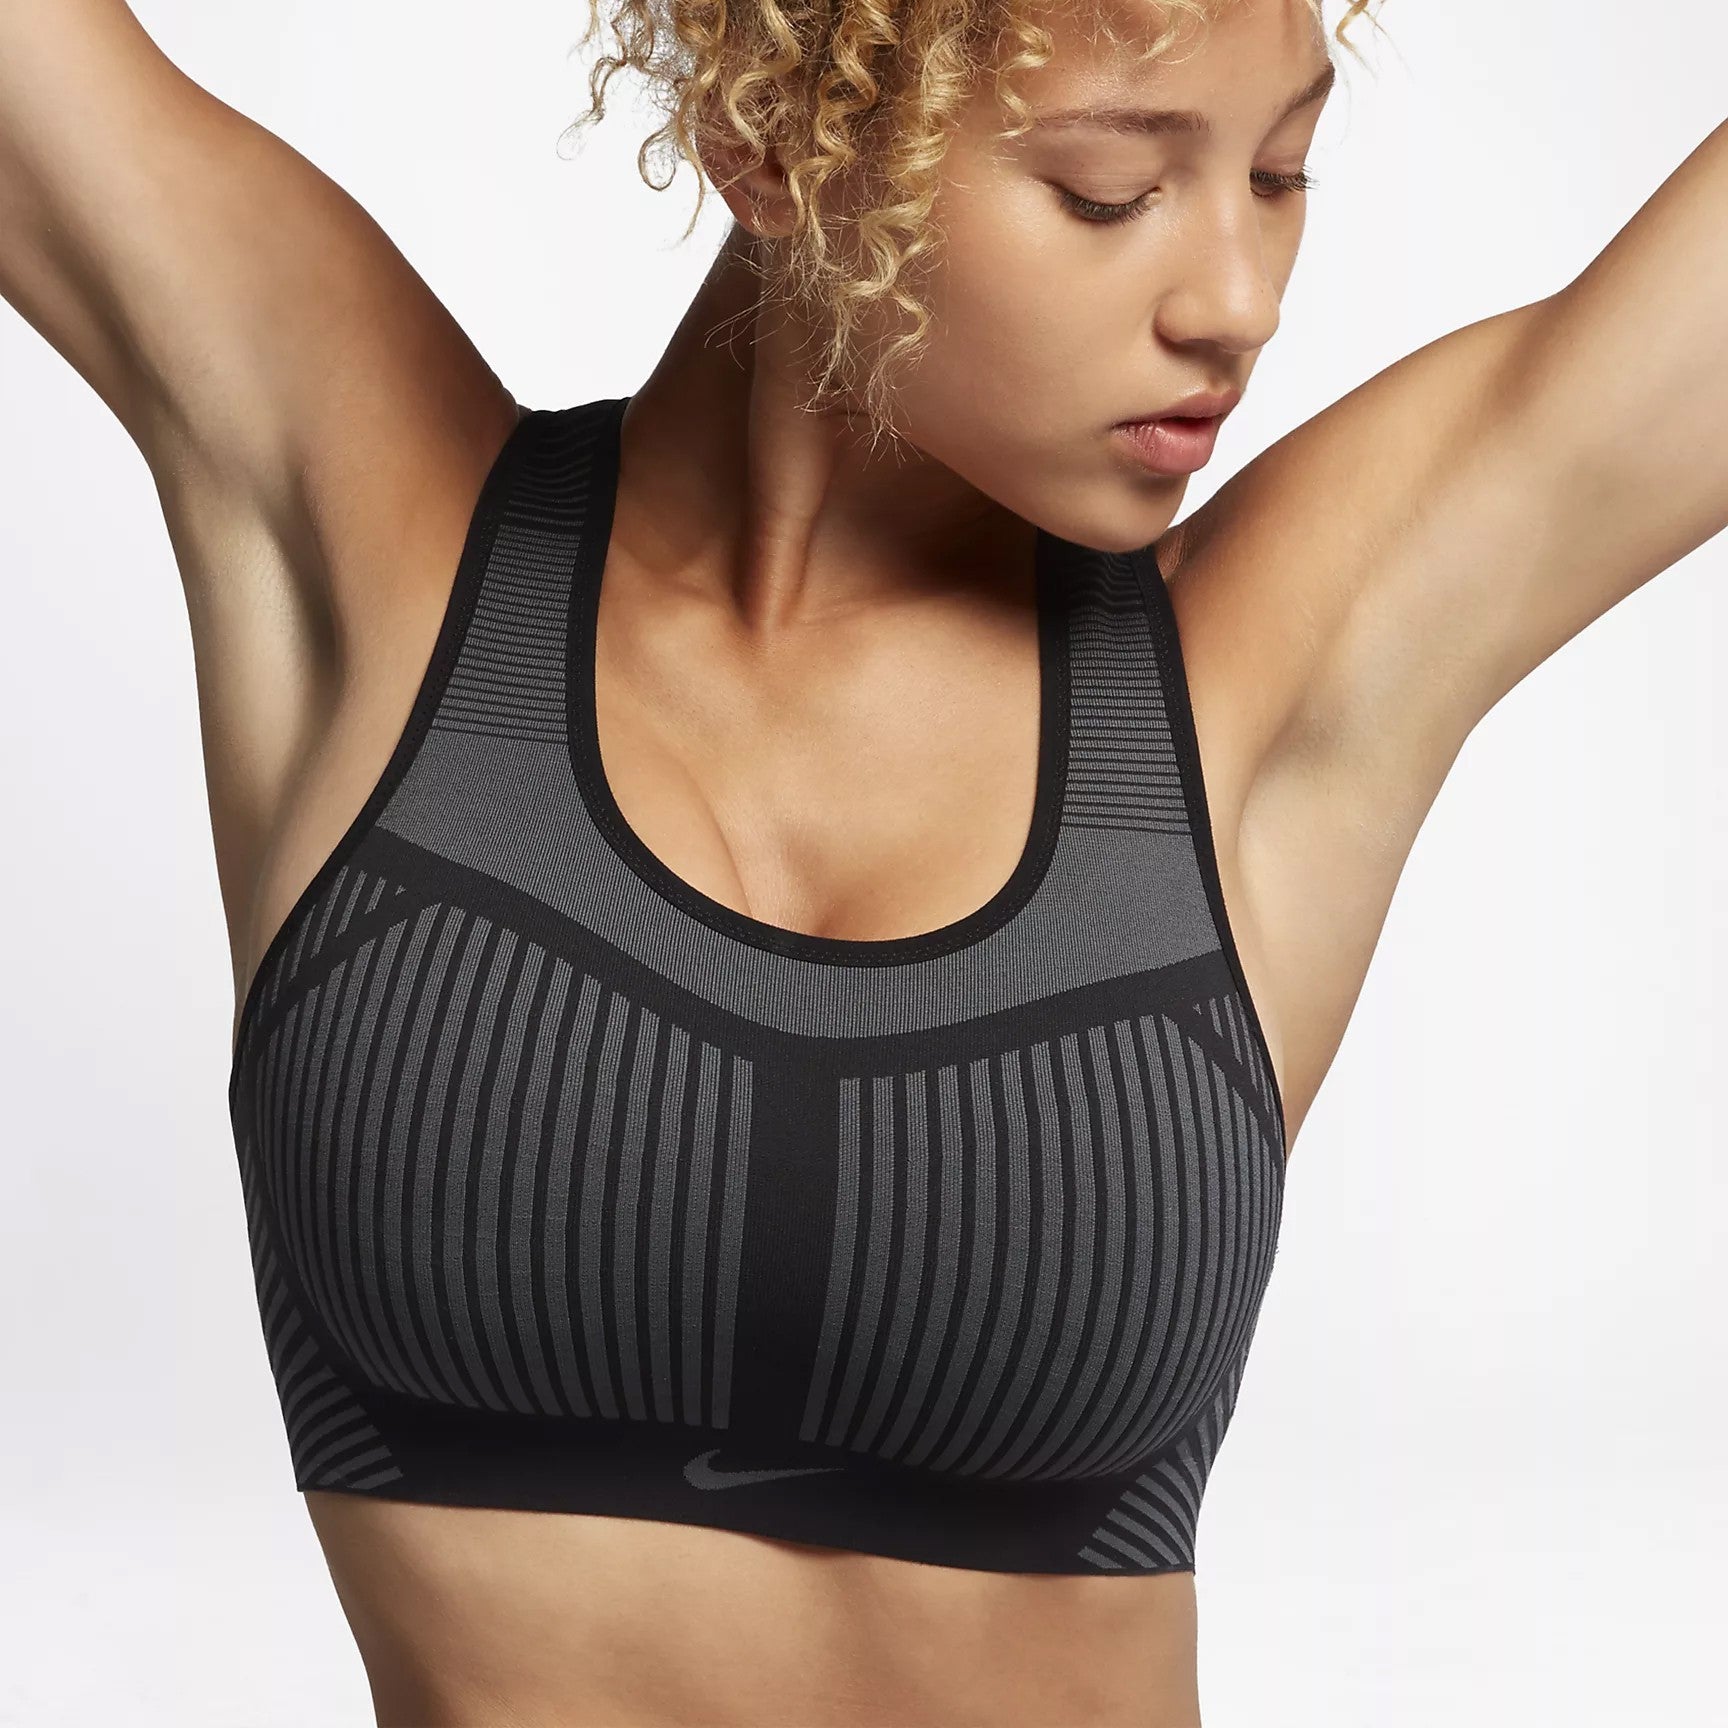 Nike Training Fenom flyknit high support sports bra in black